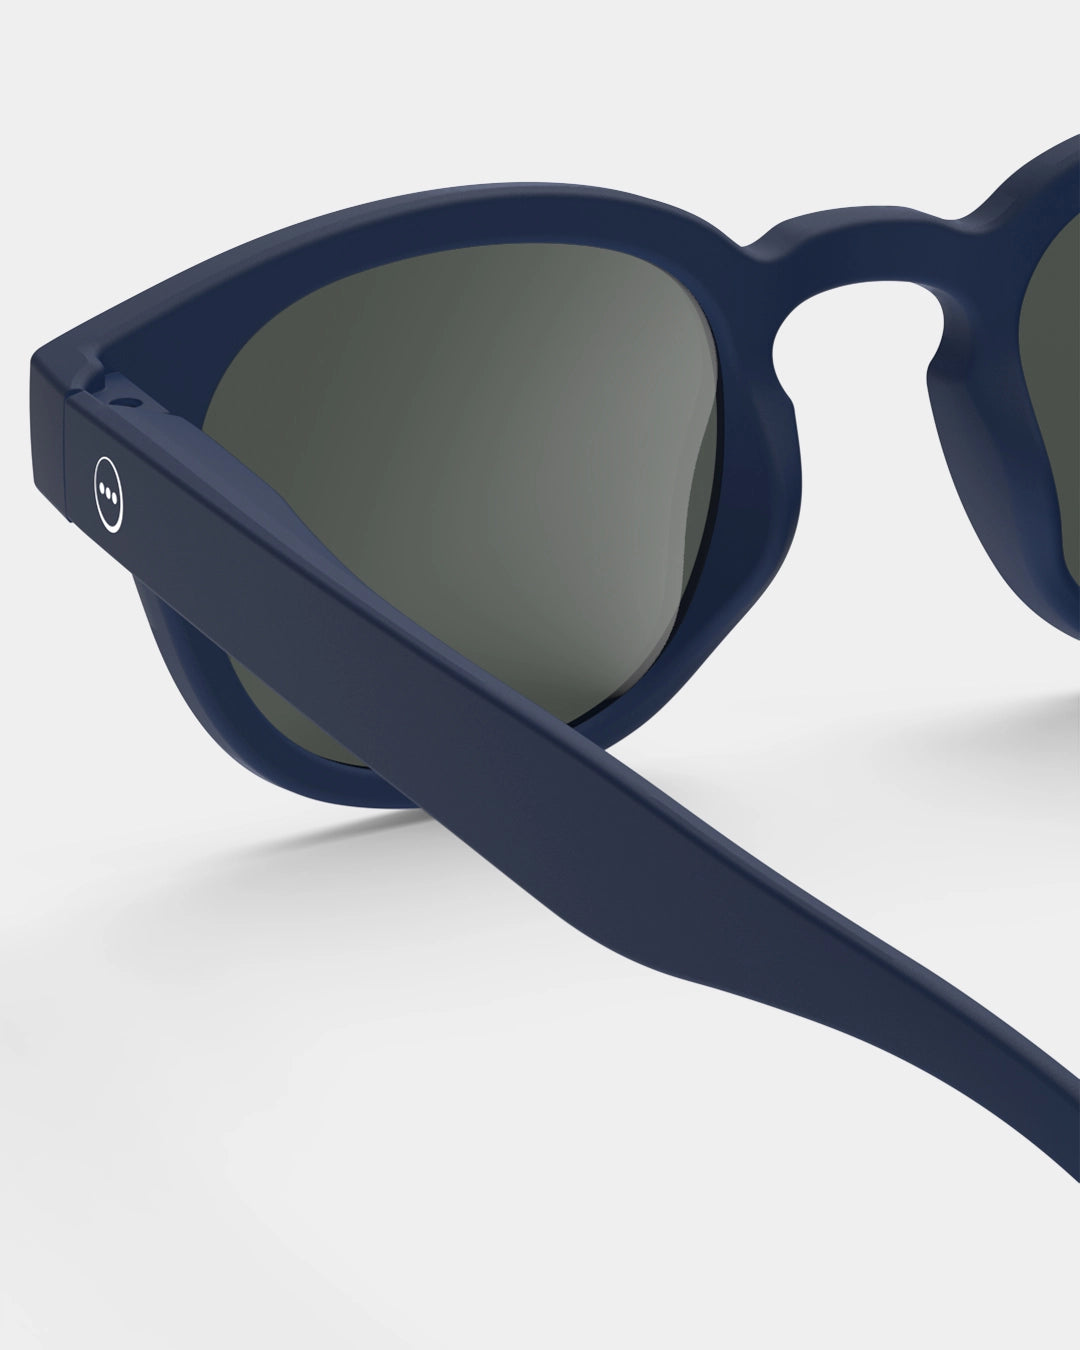 Sunglasses Izipizi Junior Sun #C Navy Blue